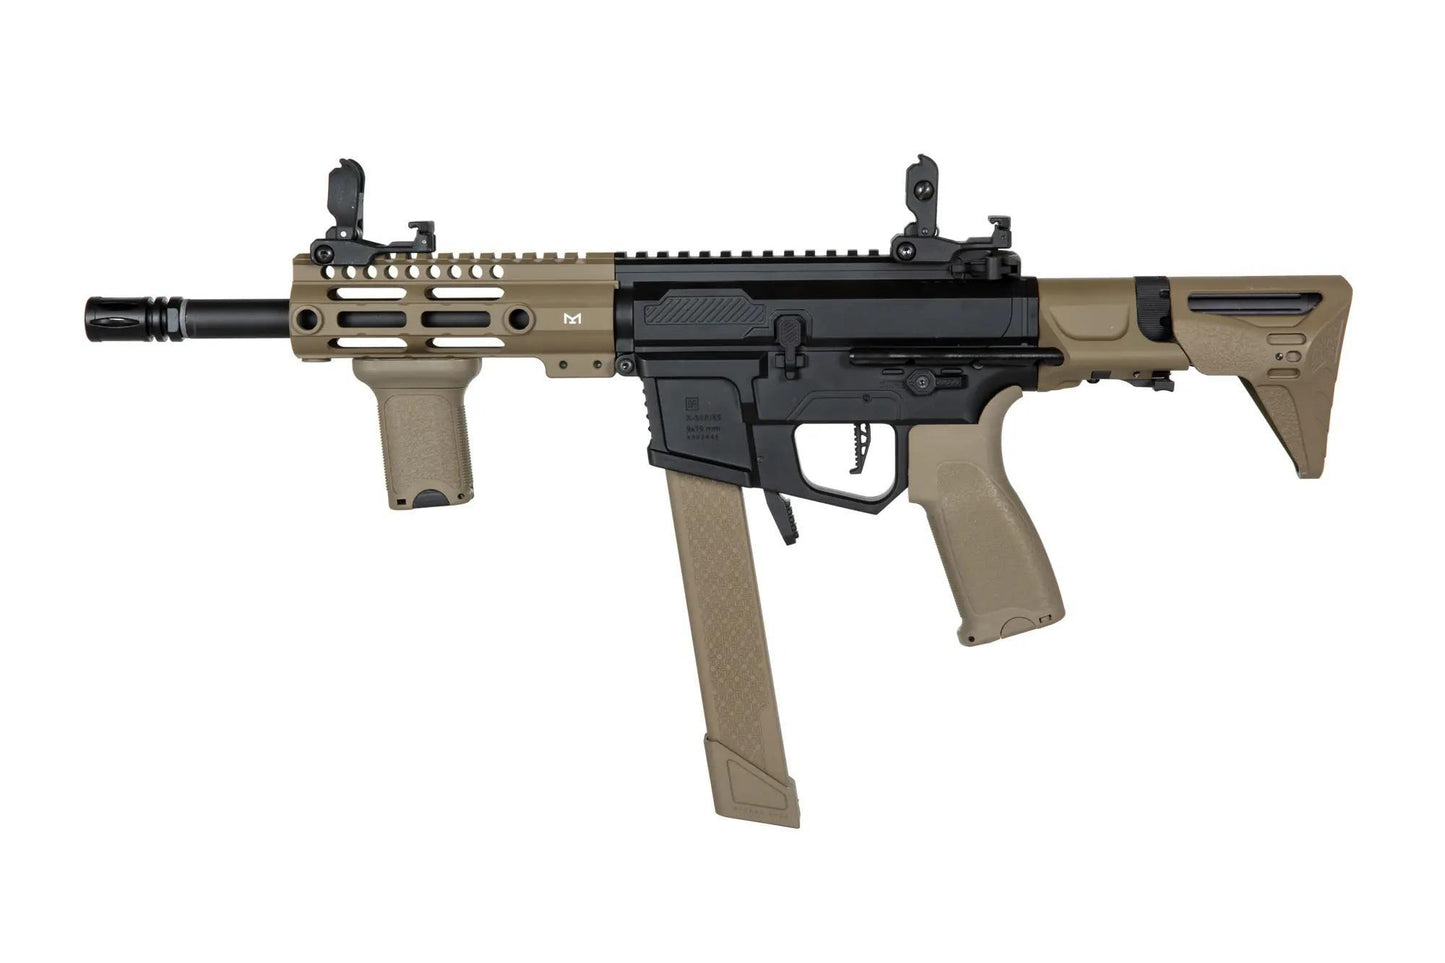 SA-X01 EDGE 2.0 Submachine Gun Replica